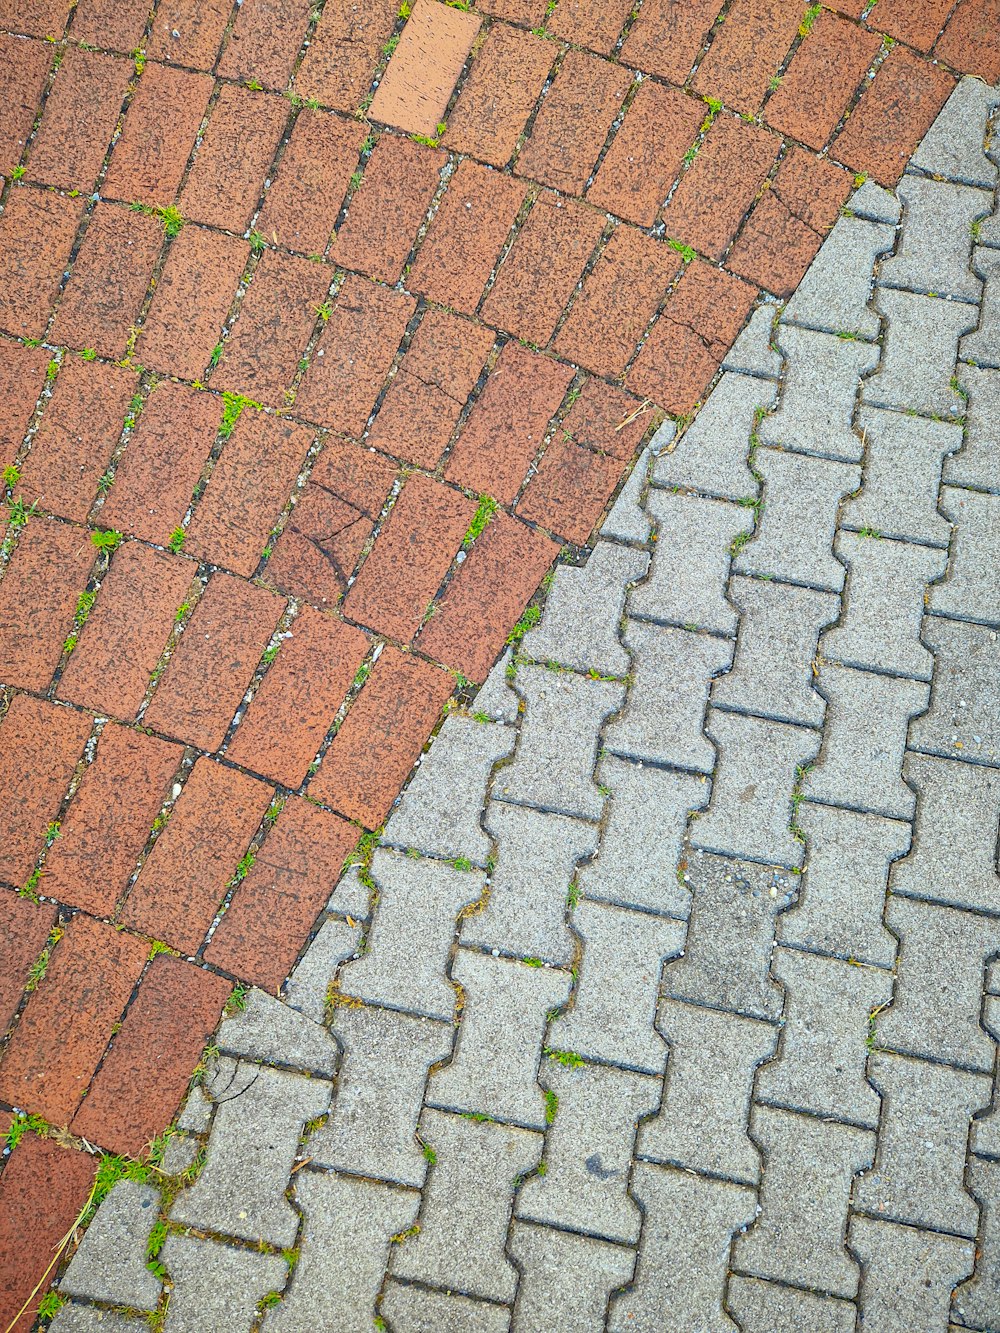 a brick walkway with a brick path